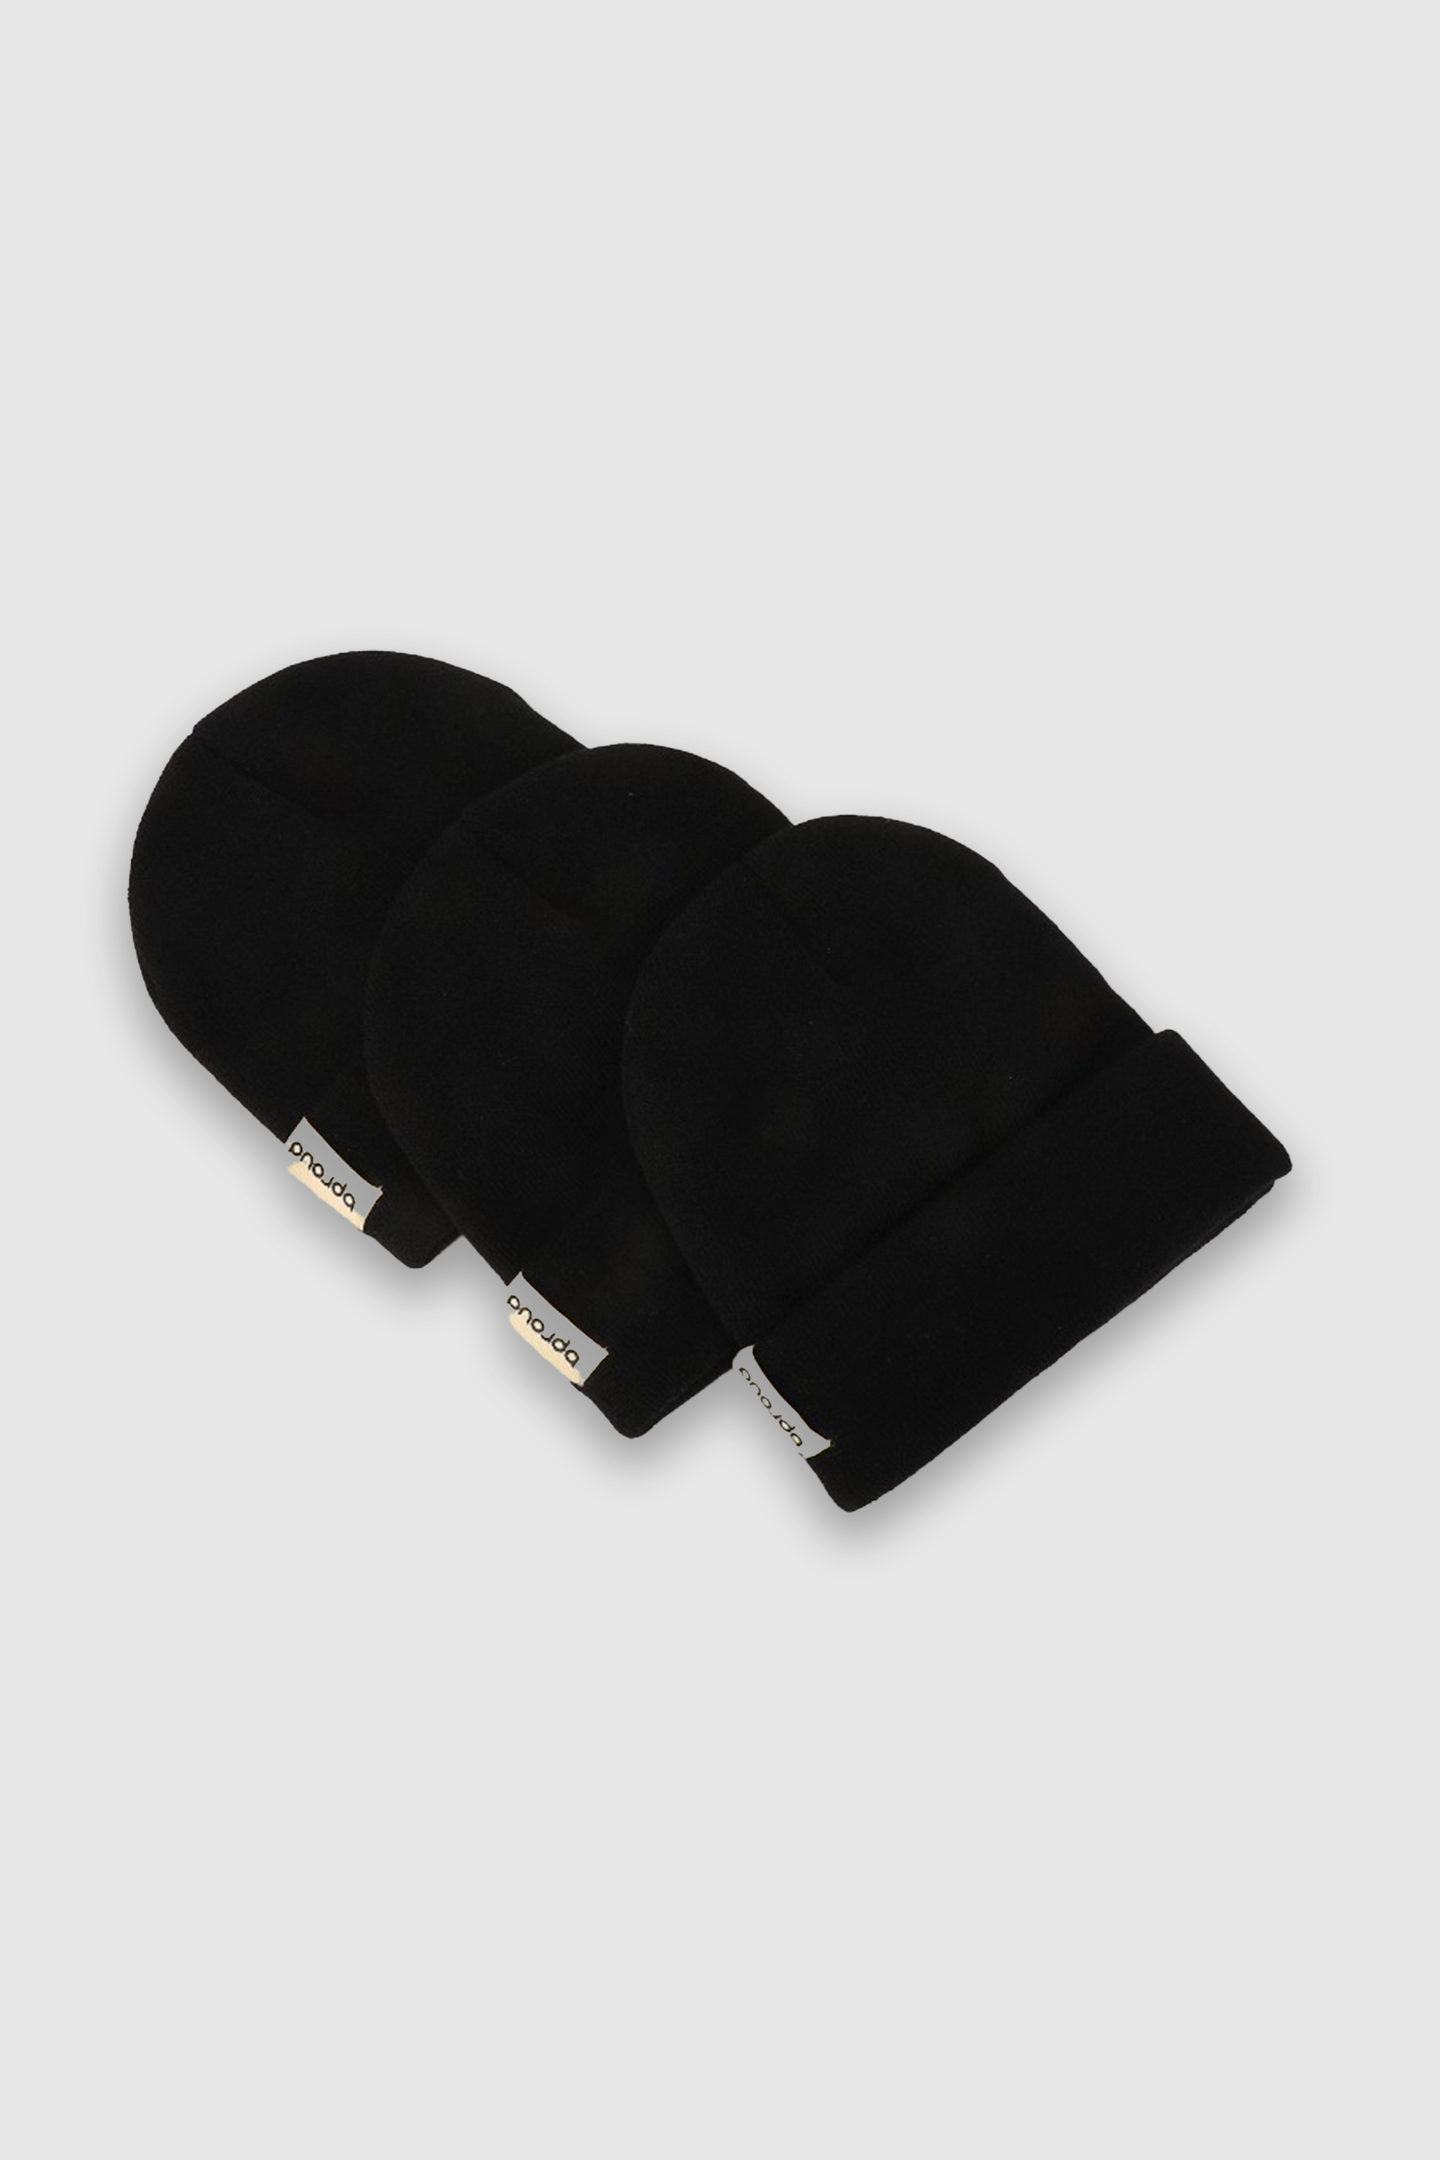 Bproud "Black" Acrylic Knit Beanie